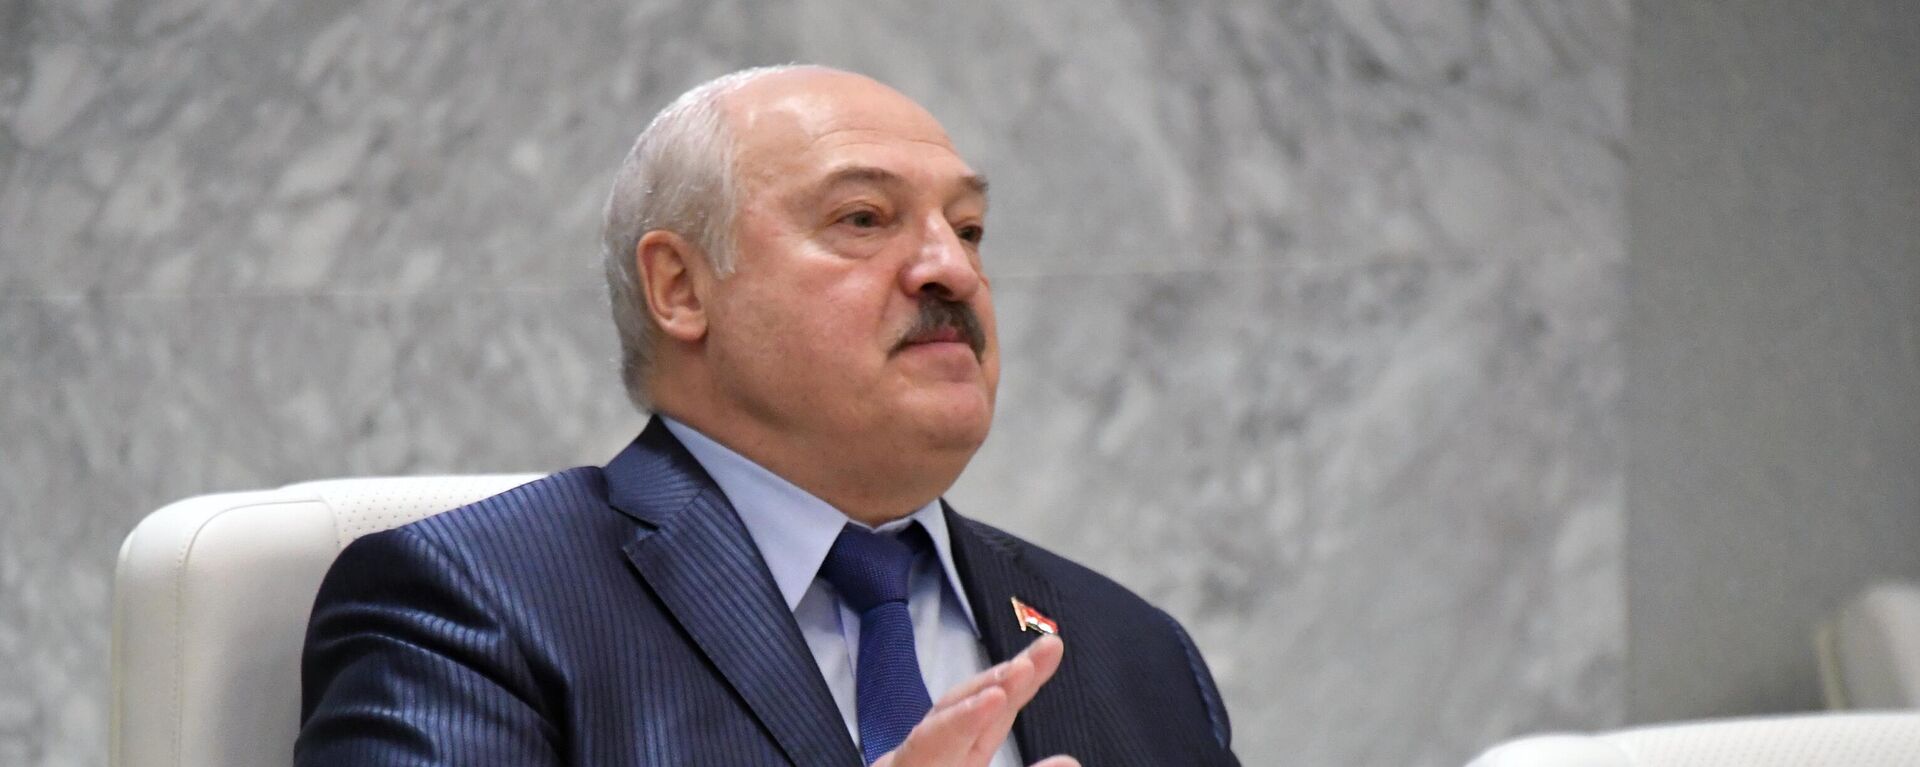 O presidente belarusso, Aleksandr Lukashenko, gesticula durante evento em Vladivostok, na Rússia, 13 de abril de 2022 - Sputnik Brasil, 1920, 02.07.2022